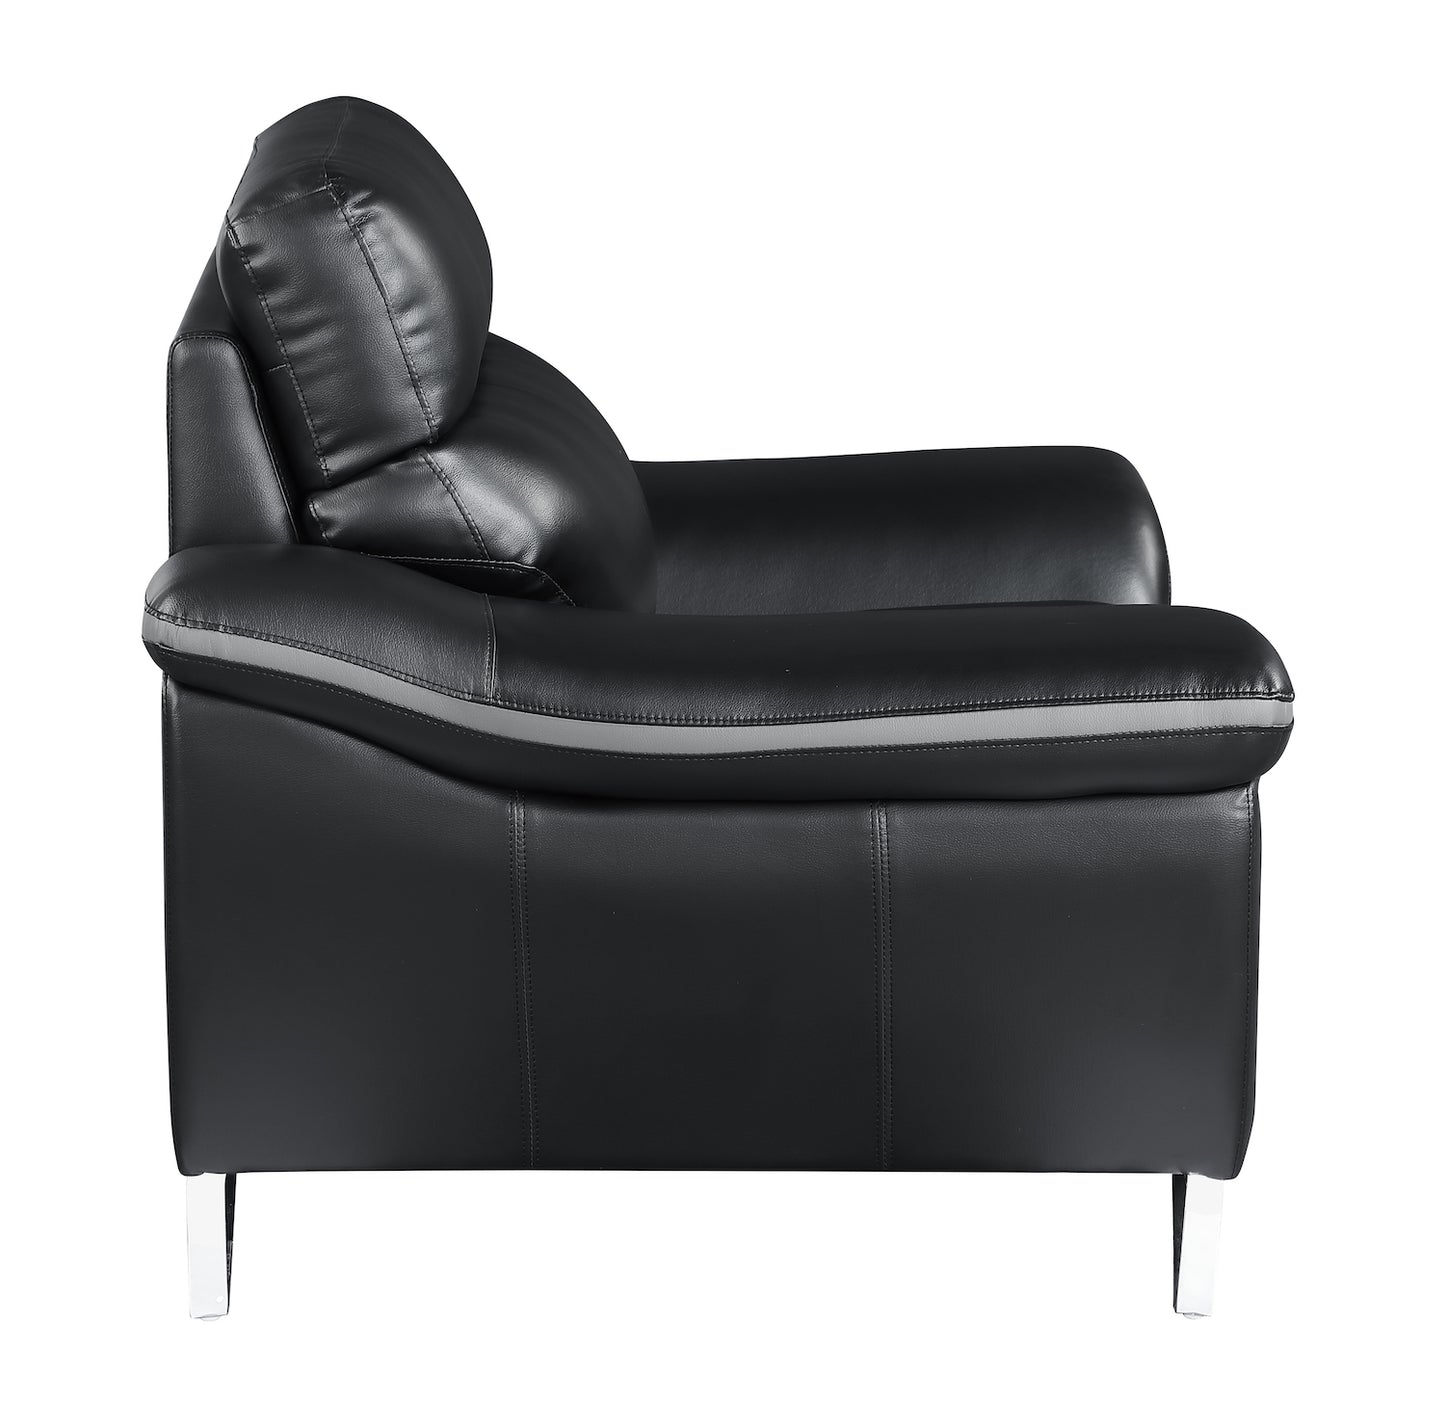 GU Furniture Modern Italian Leather Sofa - Black